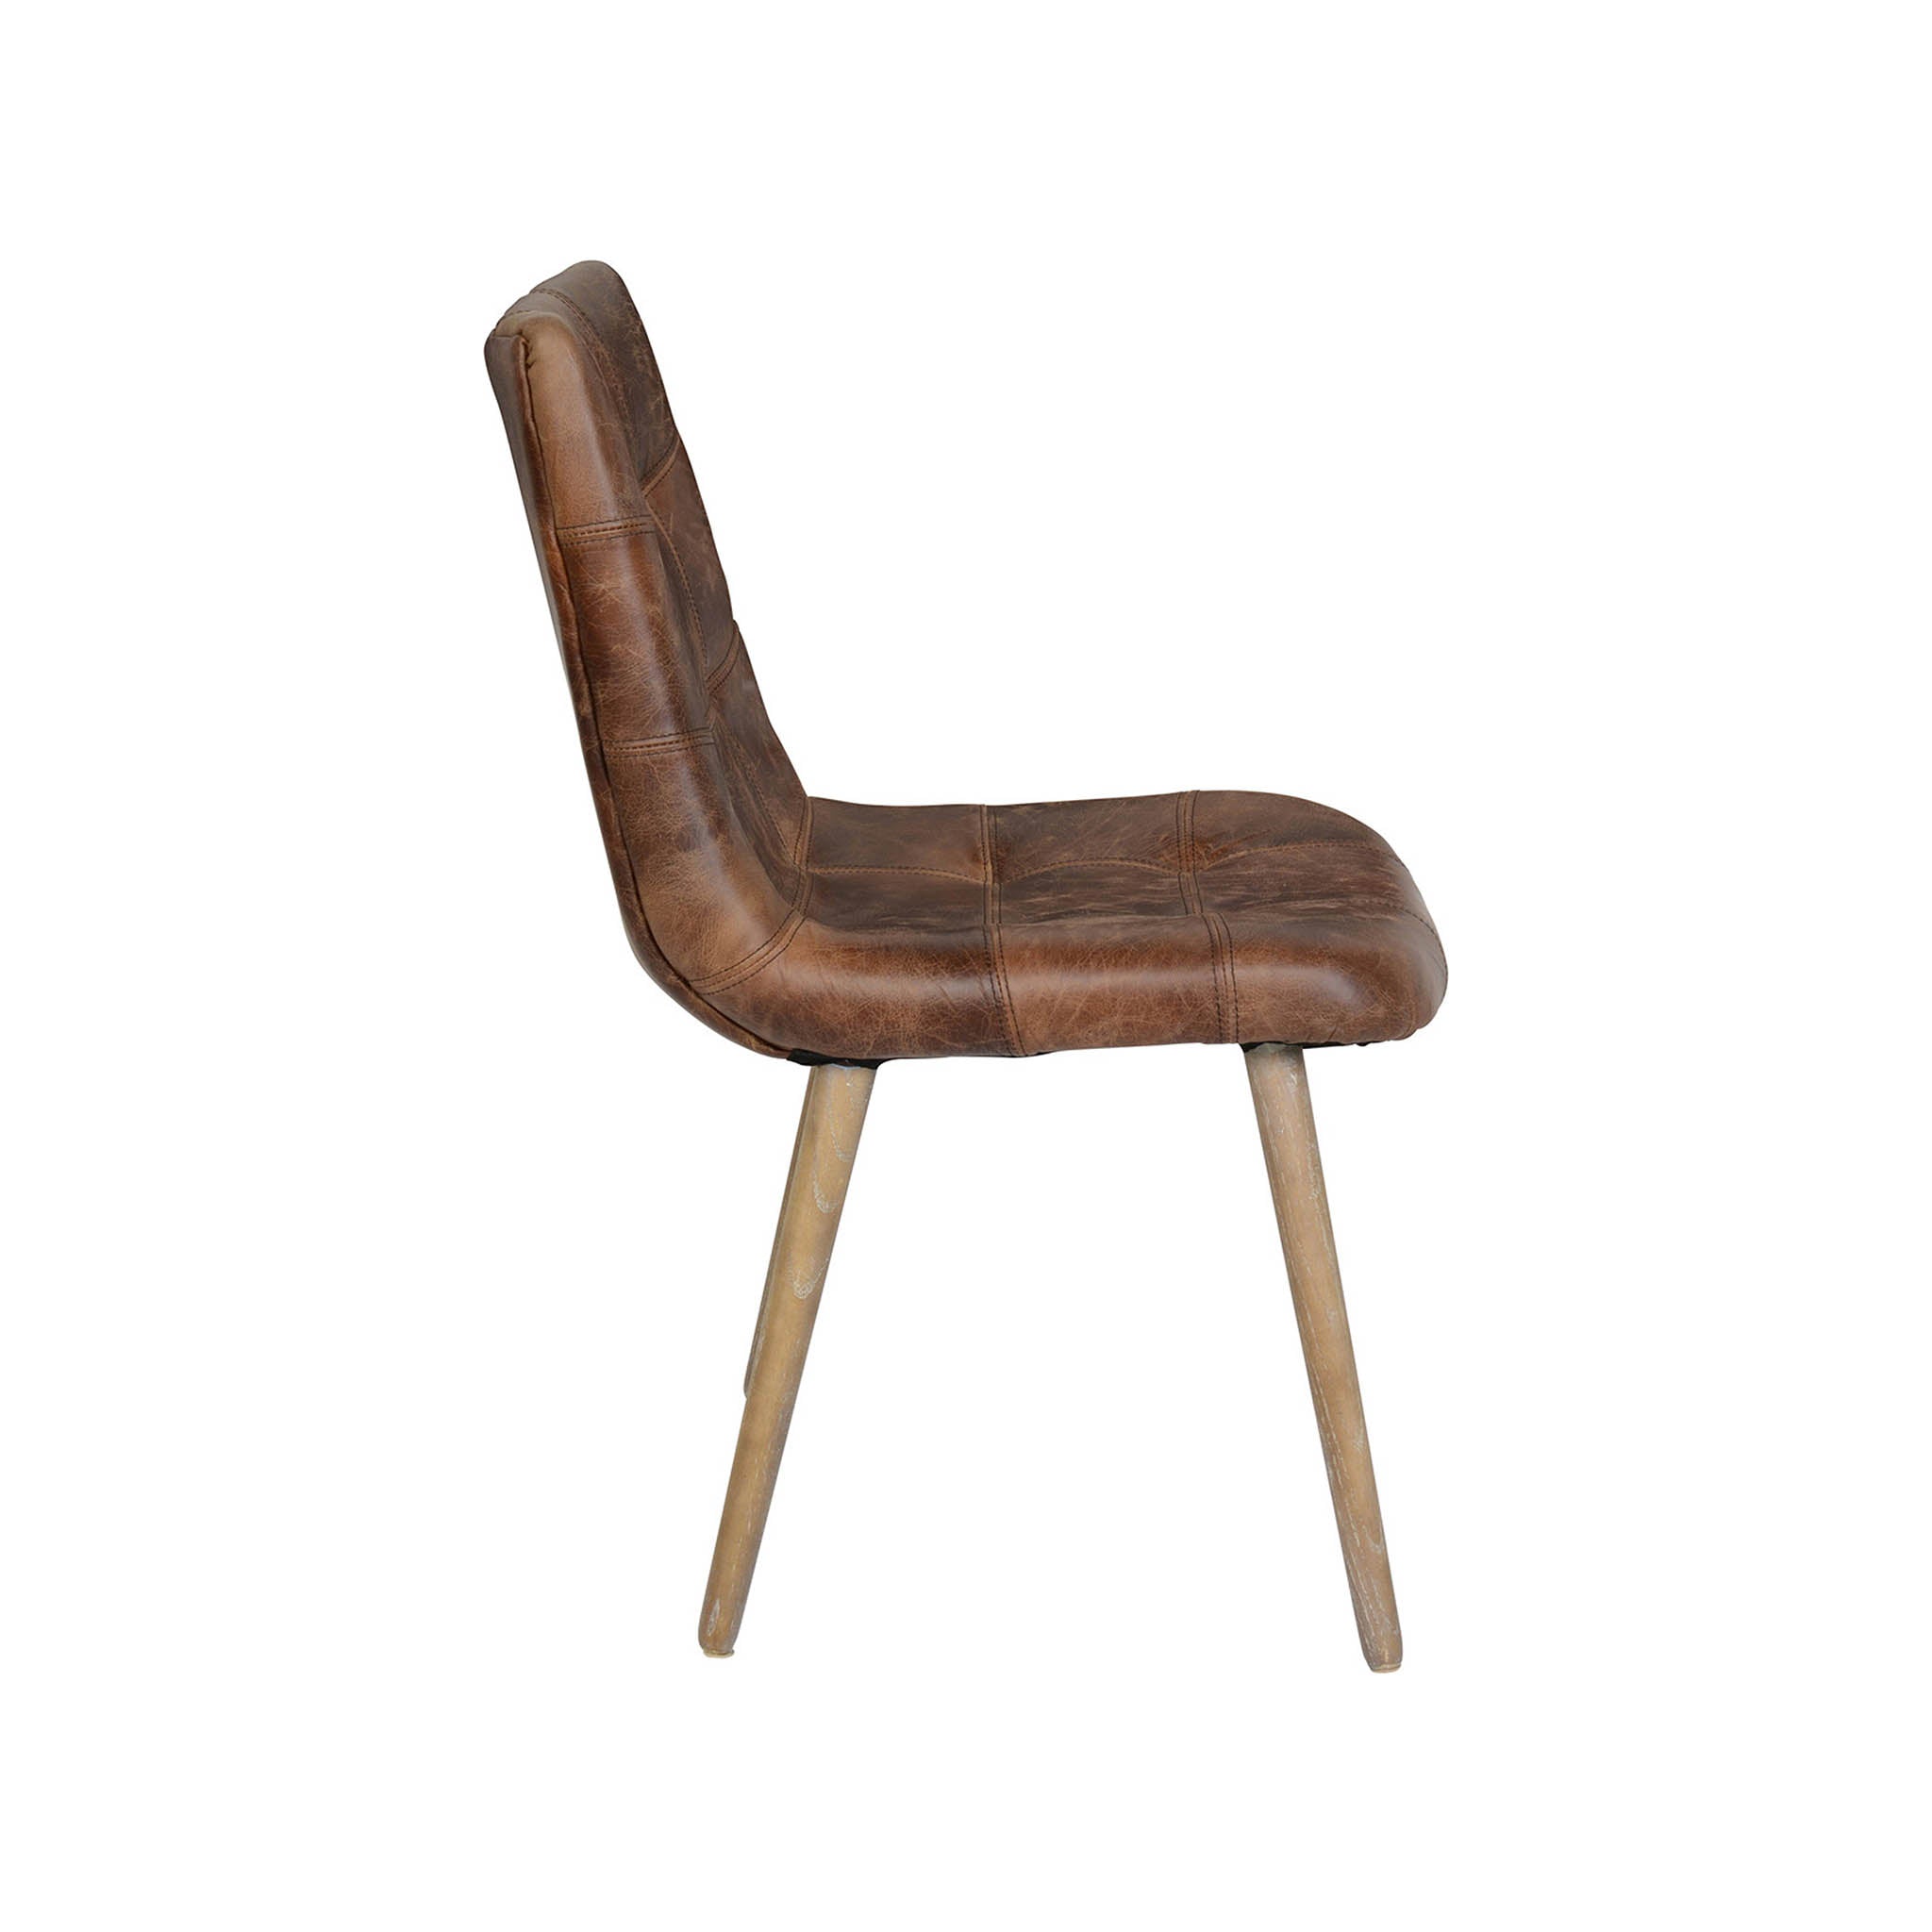 Cordogan Upholstered Dining Chair, Chestnut